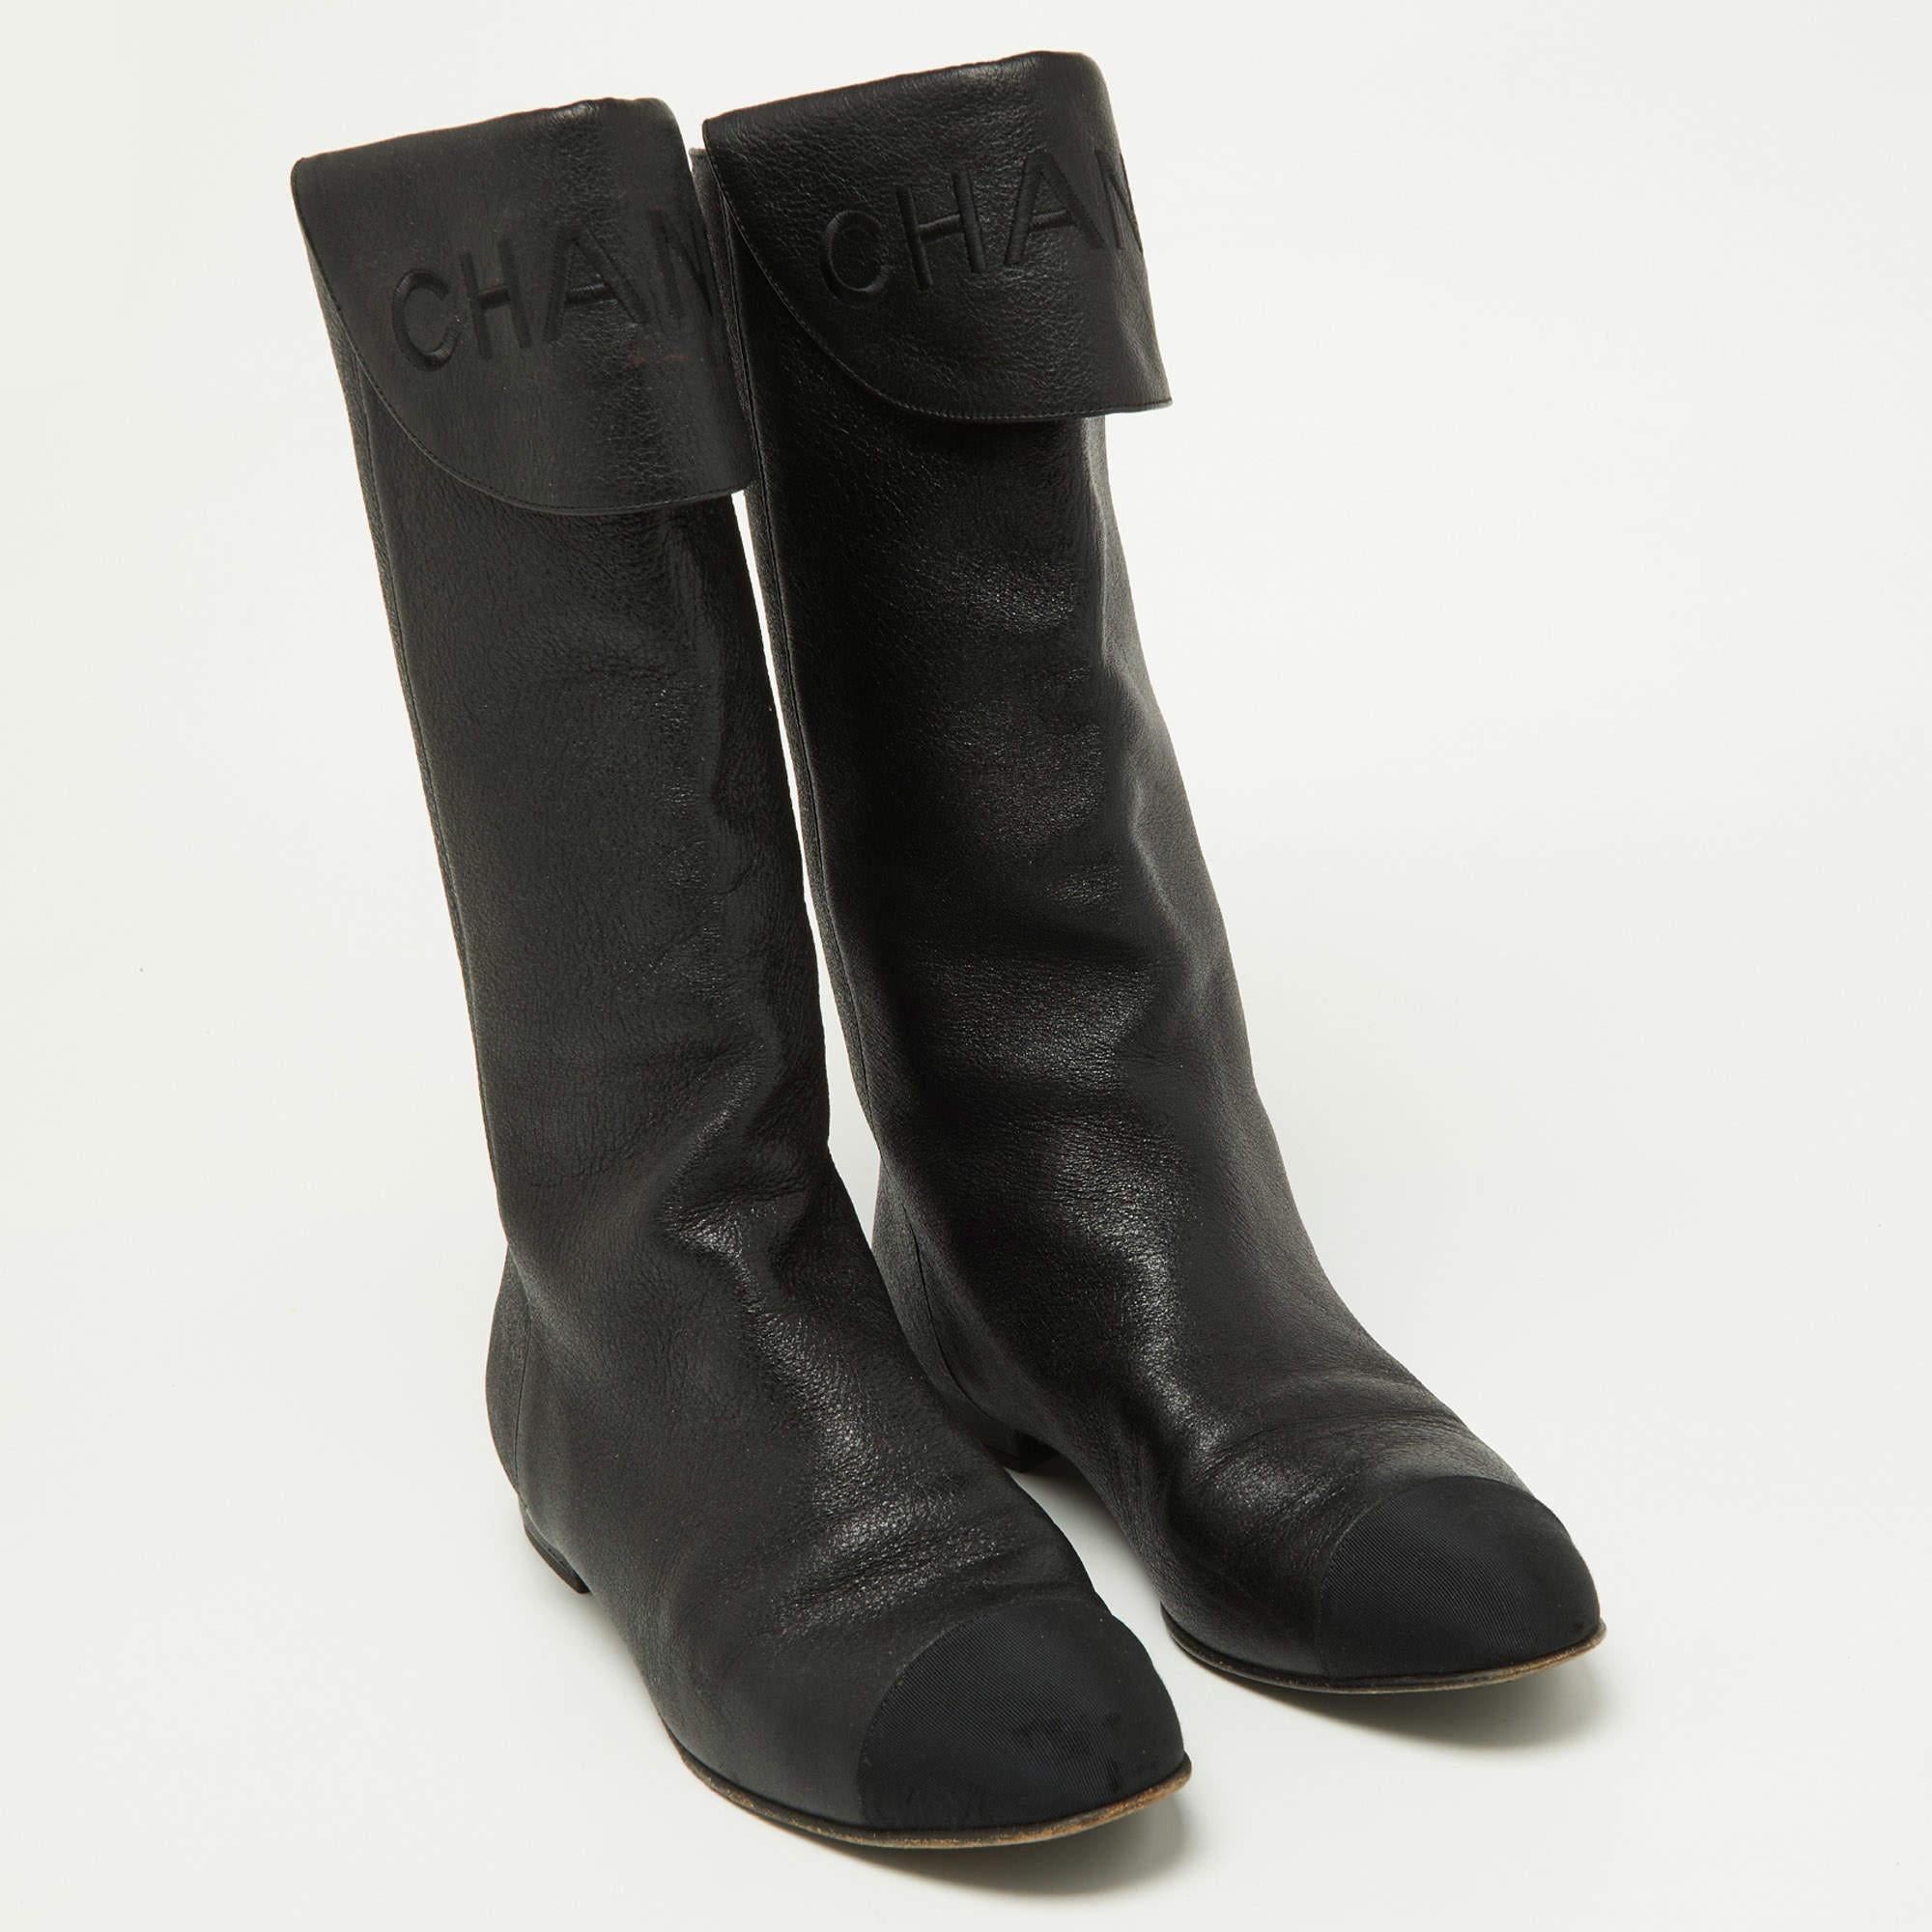 Chanel Black Leather and Grosgrain Mid Calf Boots Size 37.5 In Good Condition For Sale In Dubai, Al Qouz 2